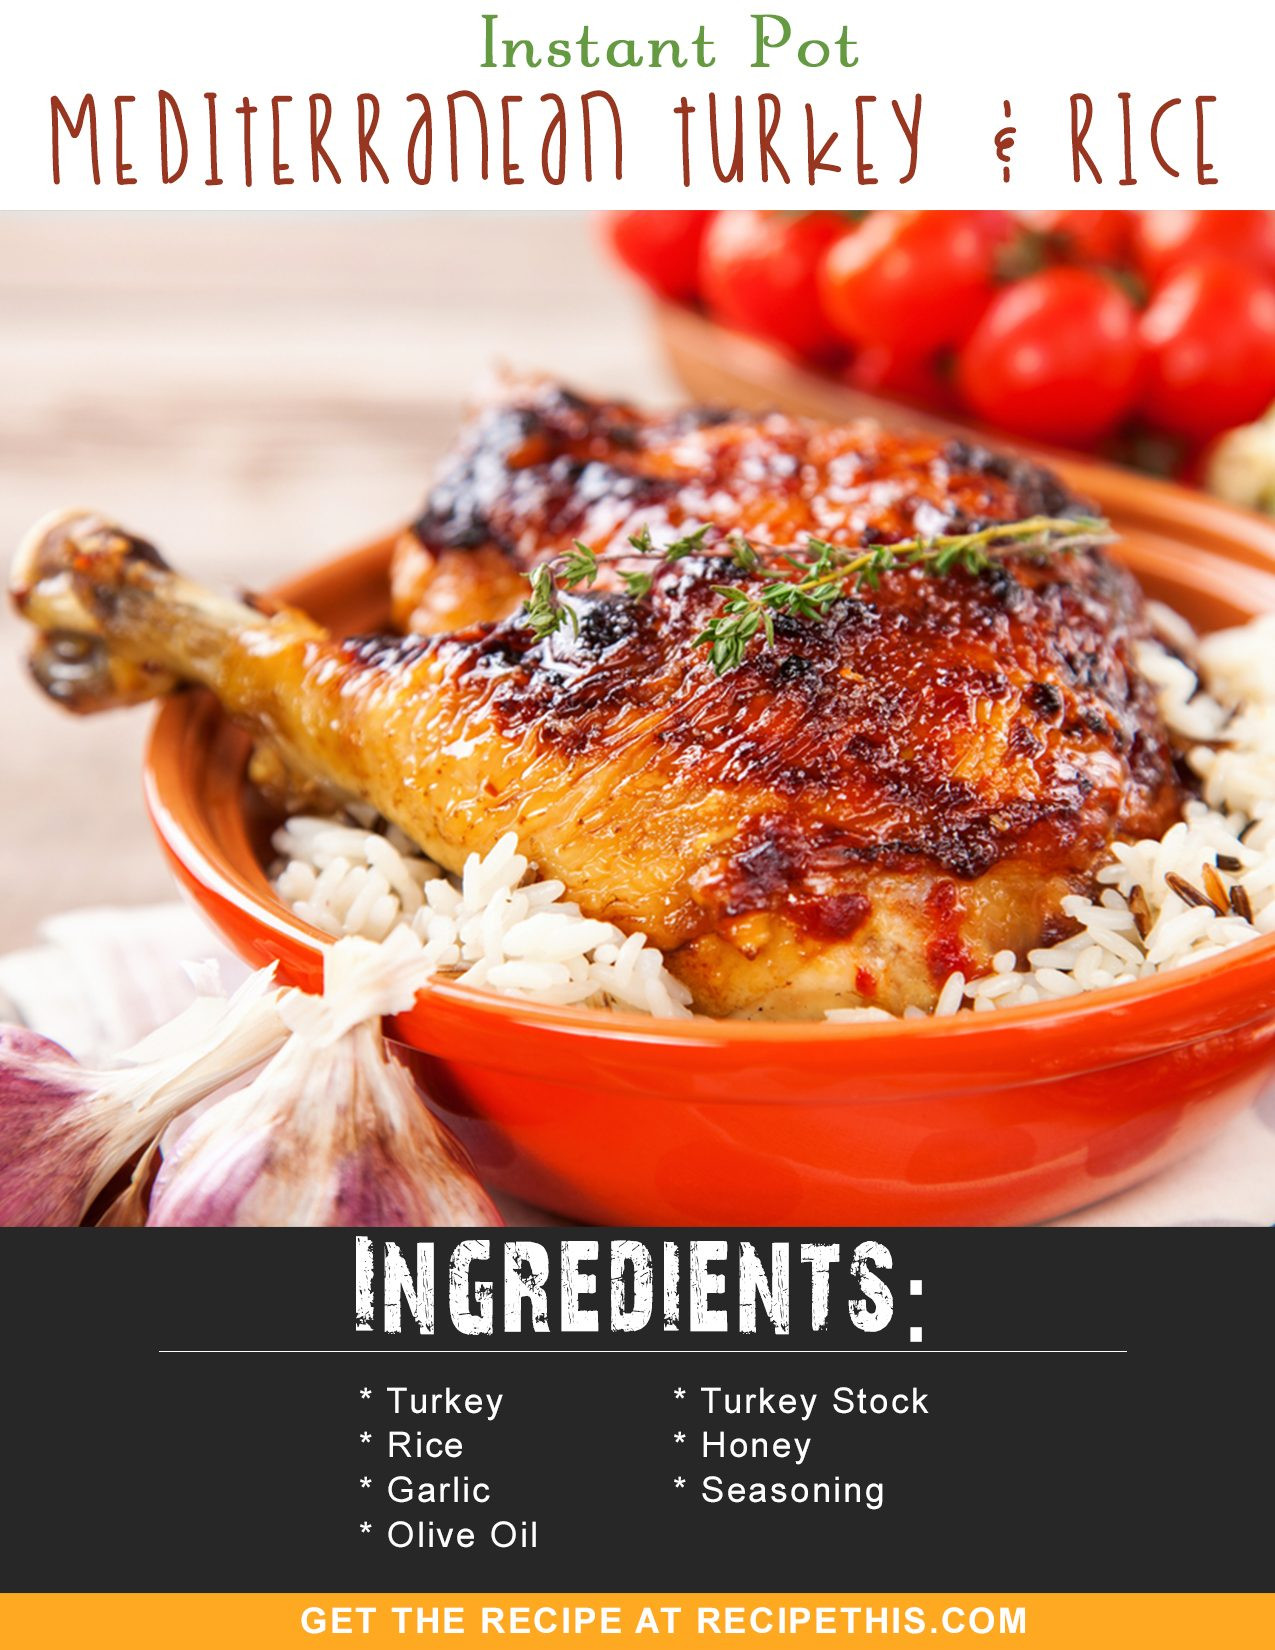 Instant Pot Thanksgiving Recipes
 Instant Pot Mediterranean Turkey & Rice